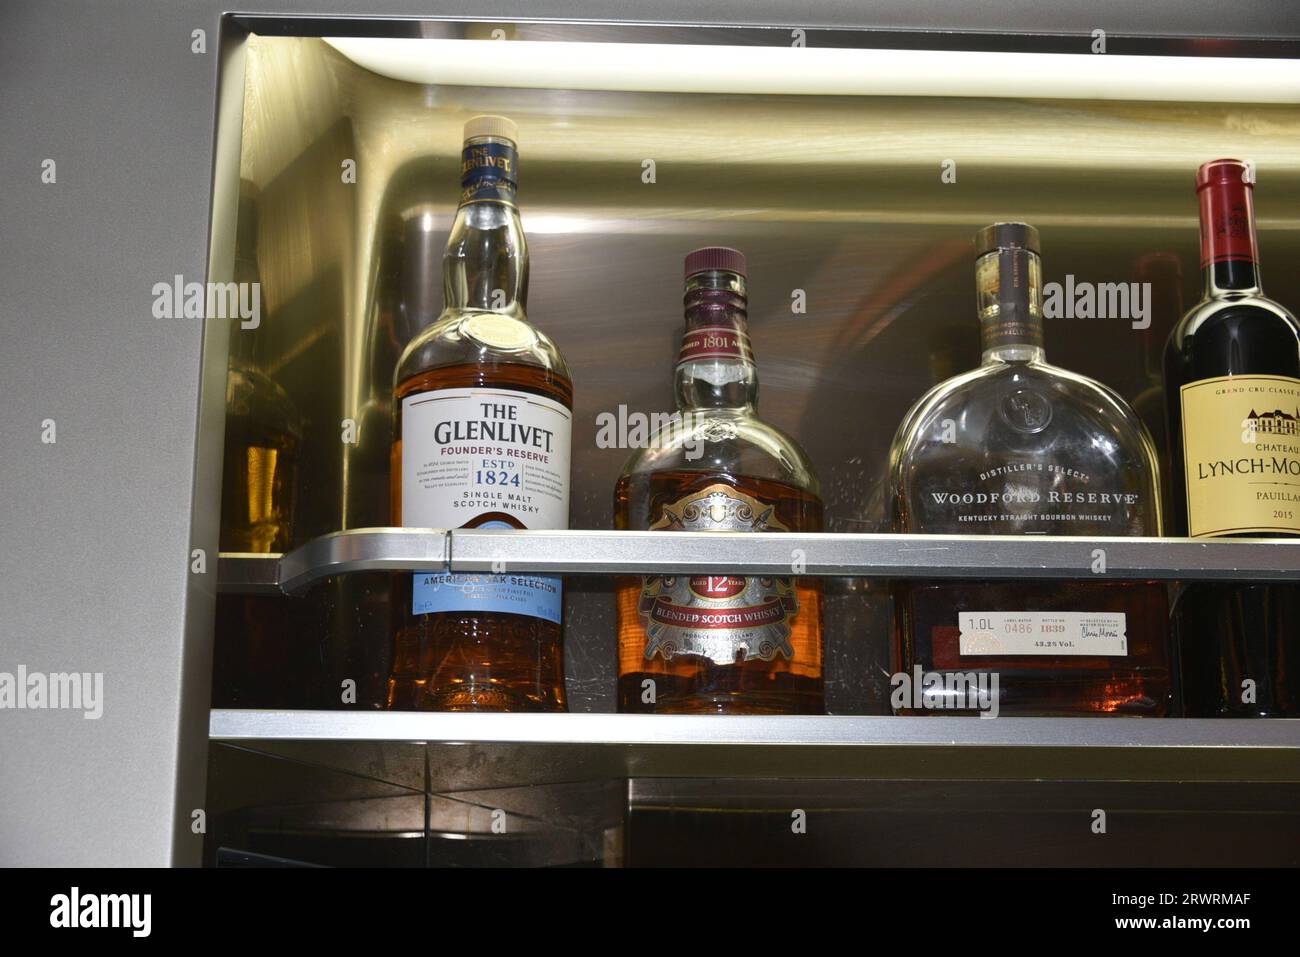 qatar Airways, A380 , business bar brandy, drink alcolici, Taste of paris, la migliore compagnia aerea del mondo Foto Stock